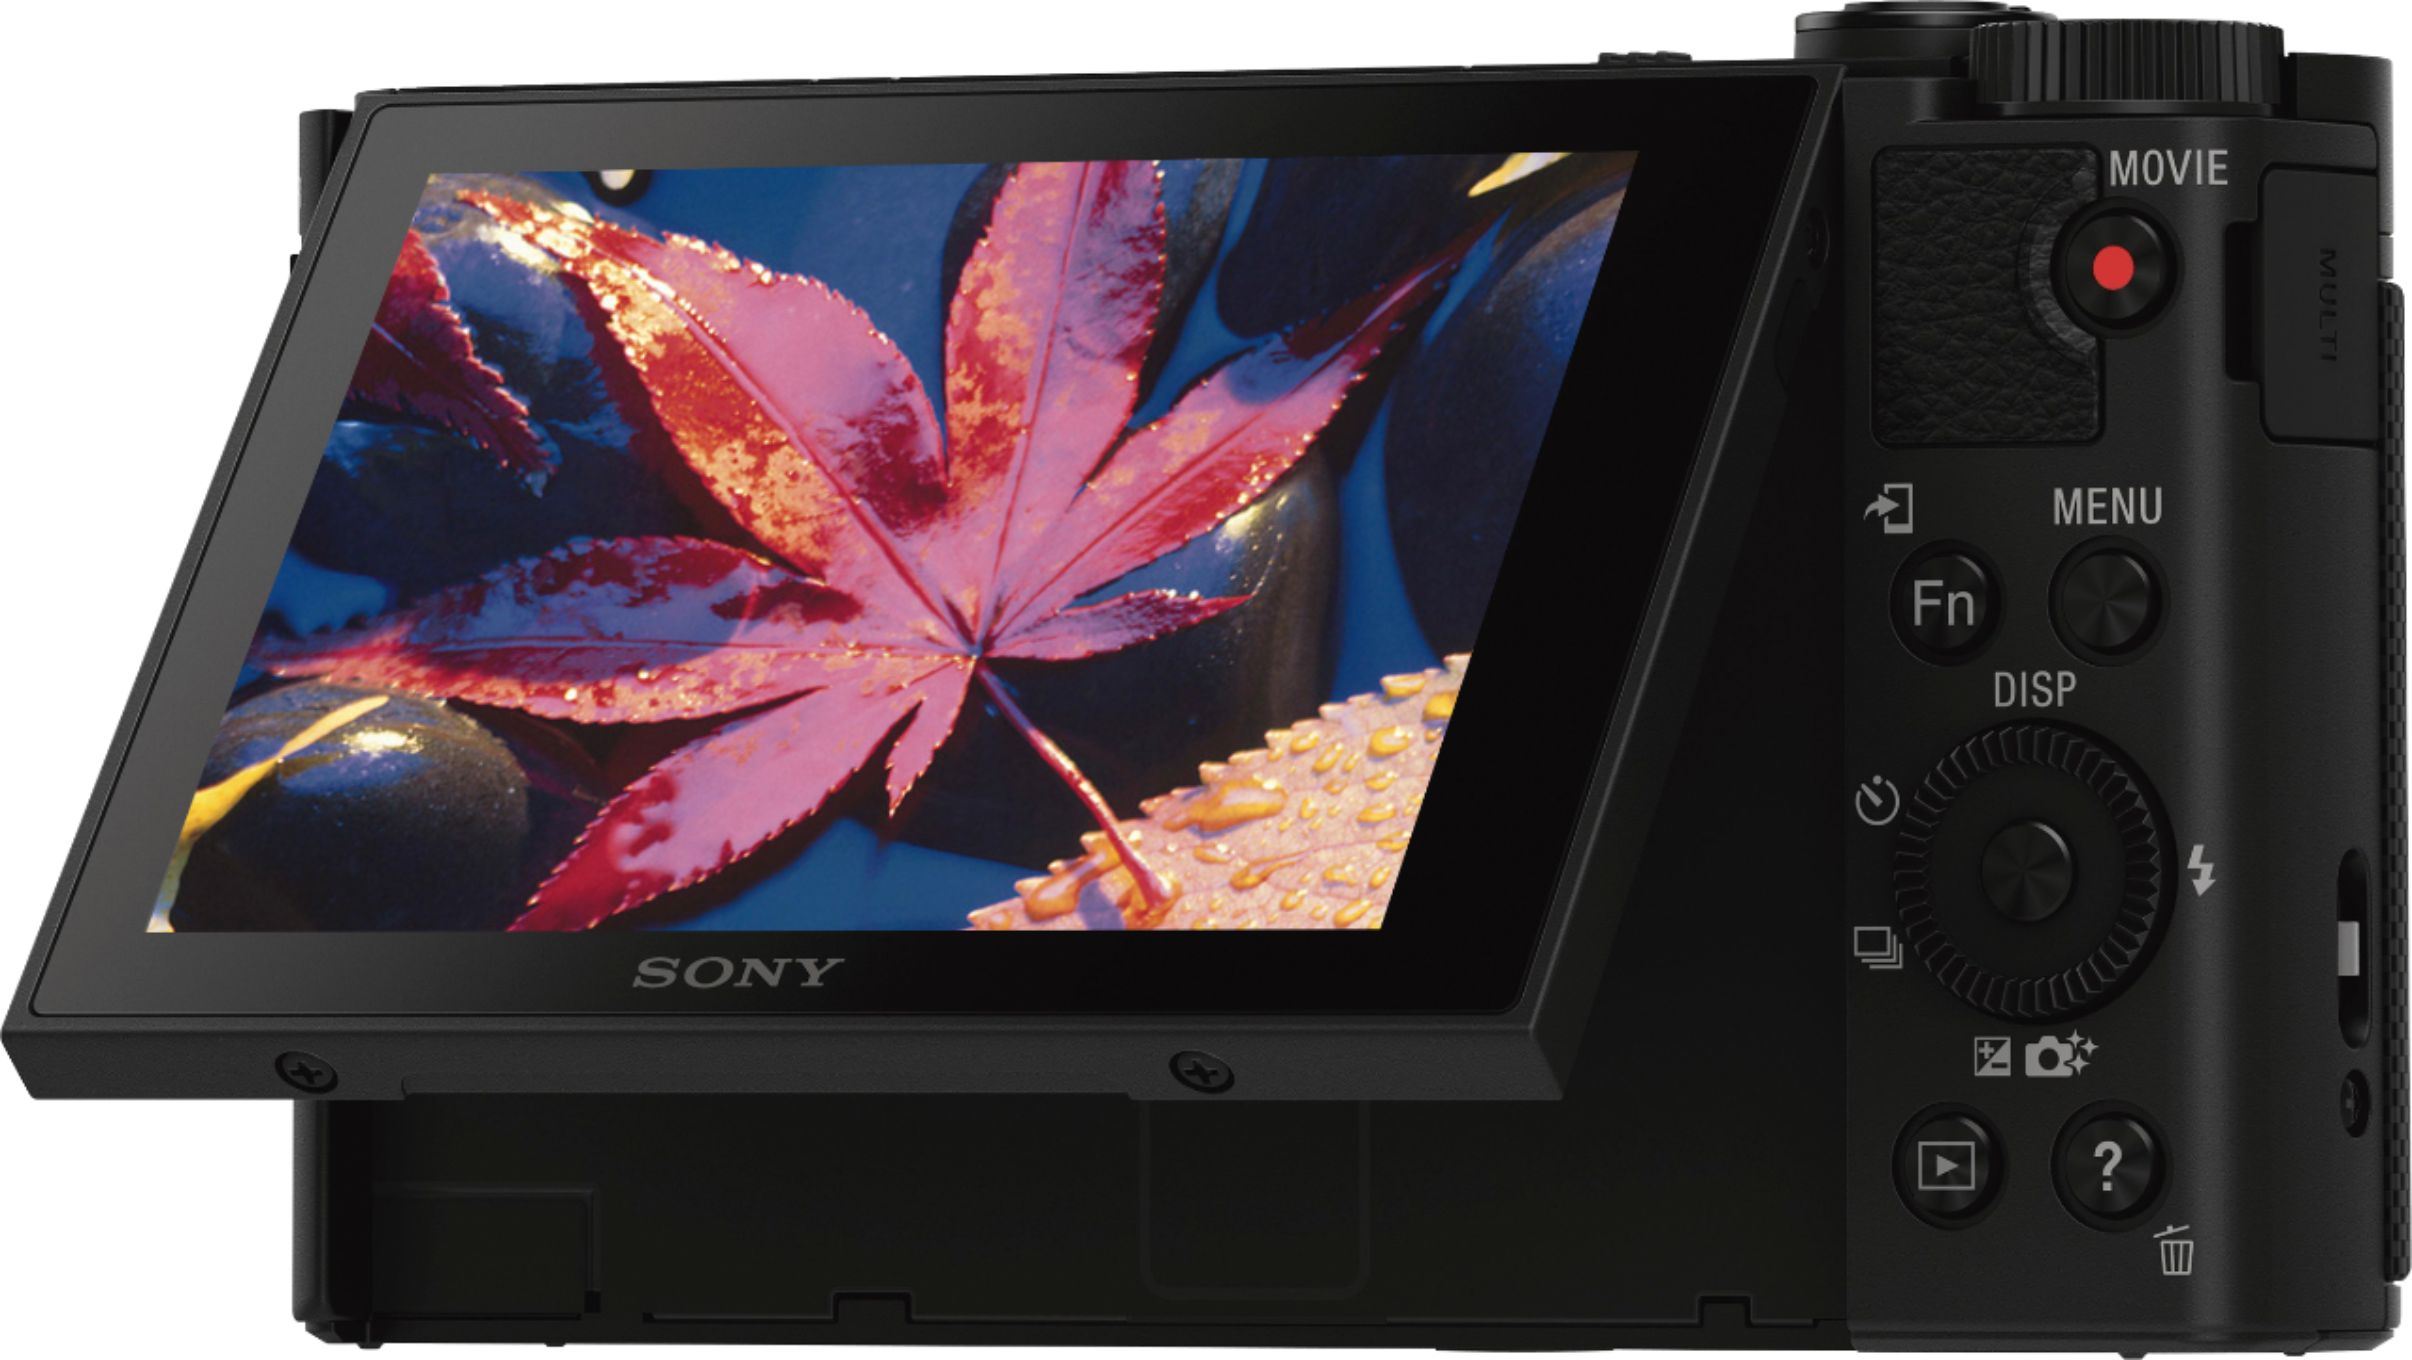 SD Memory Card For Sony Cybershot DSC-HX80 Digital Camera 